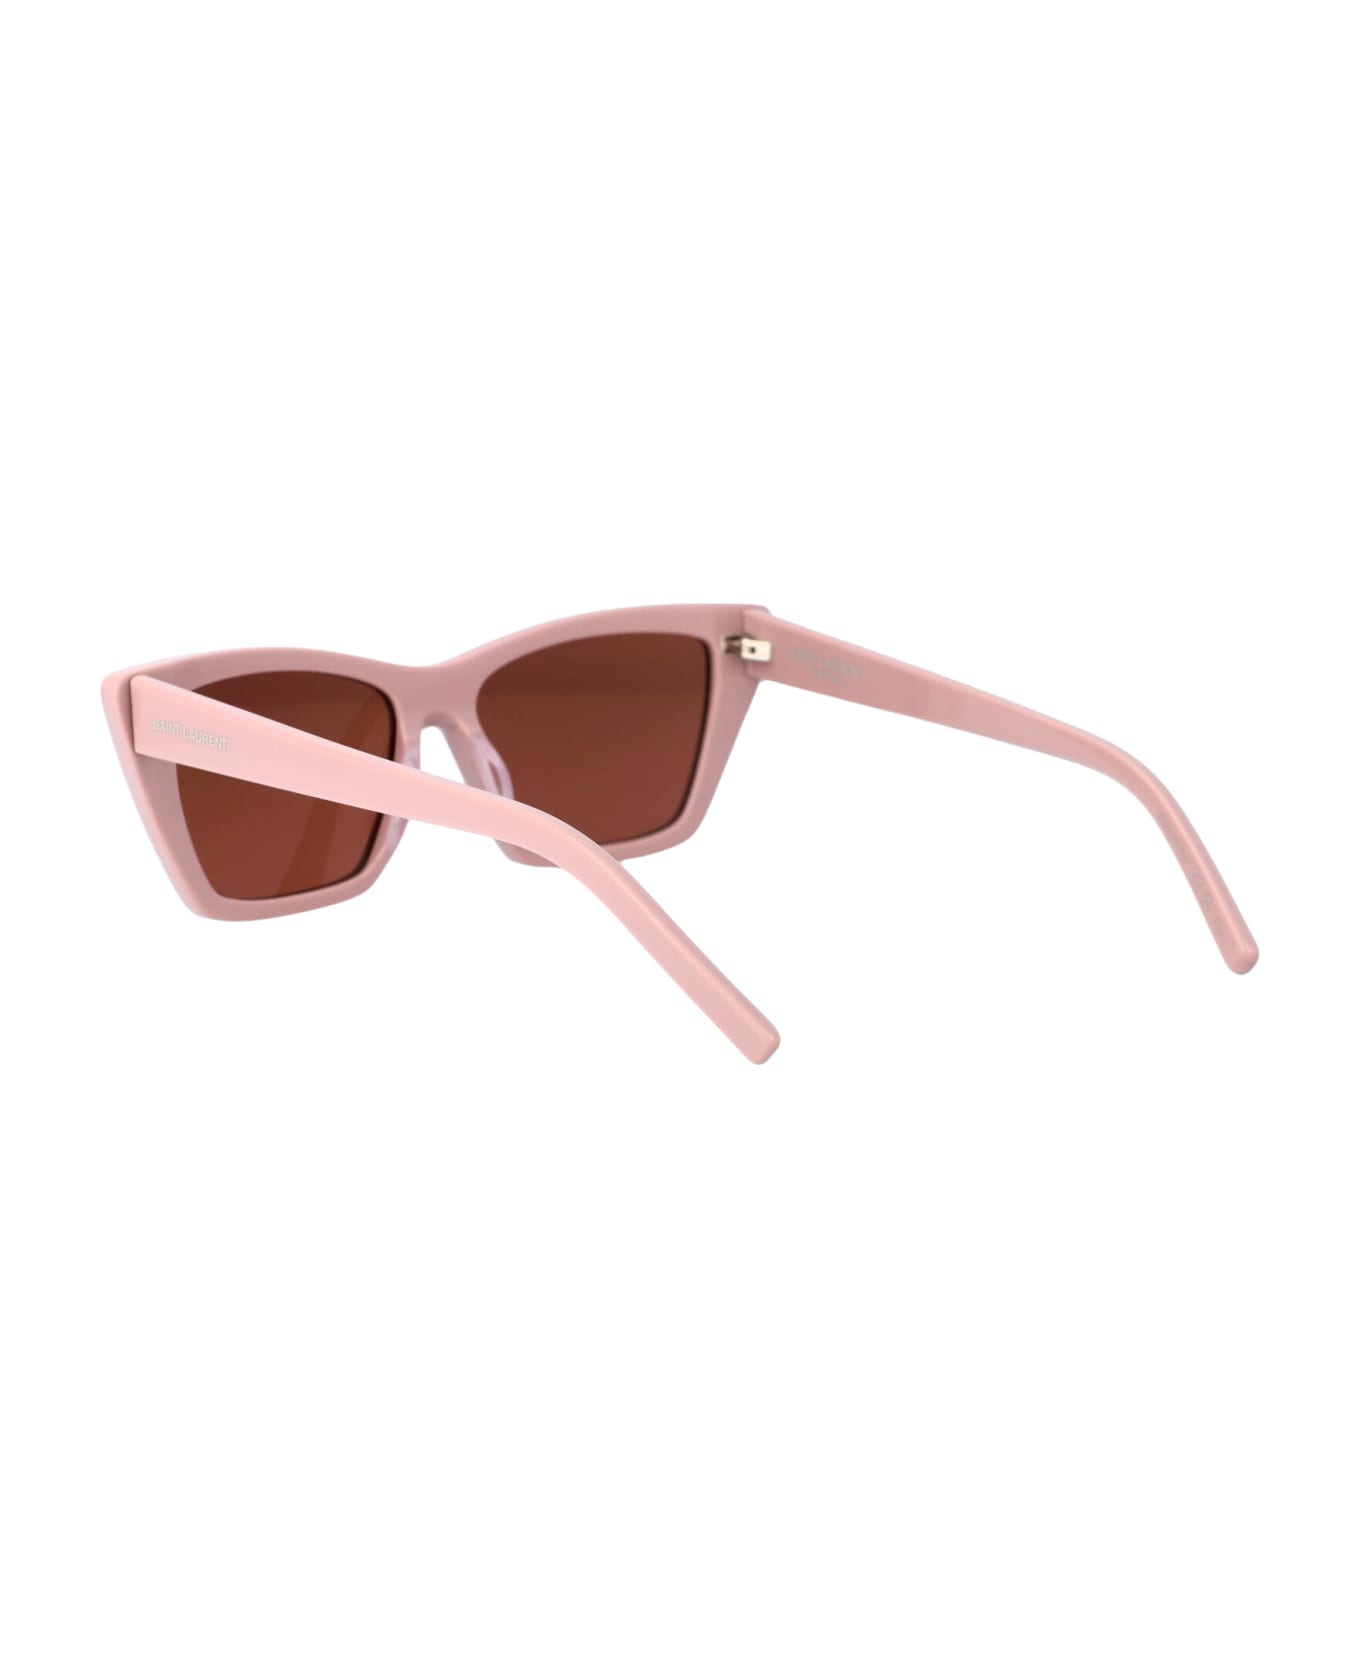 Saint Laurent Eyewear Sl 276 Mica Sunglasses - 058 PINK PINK BROWN サングラス